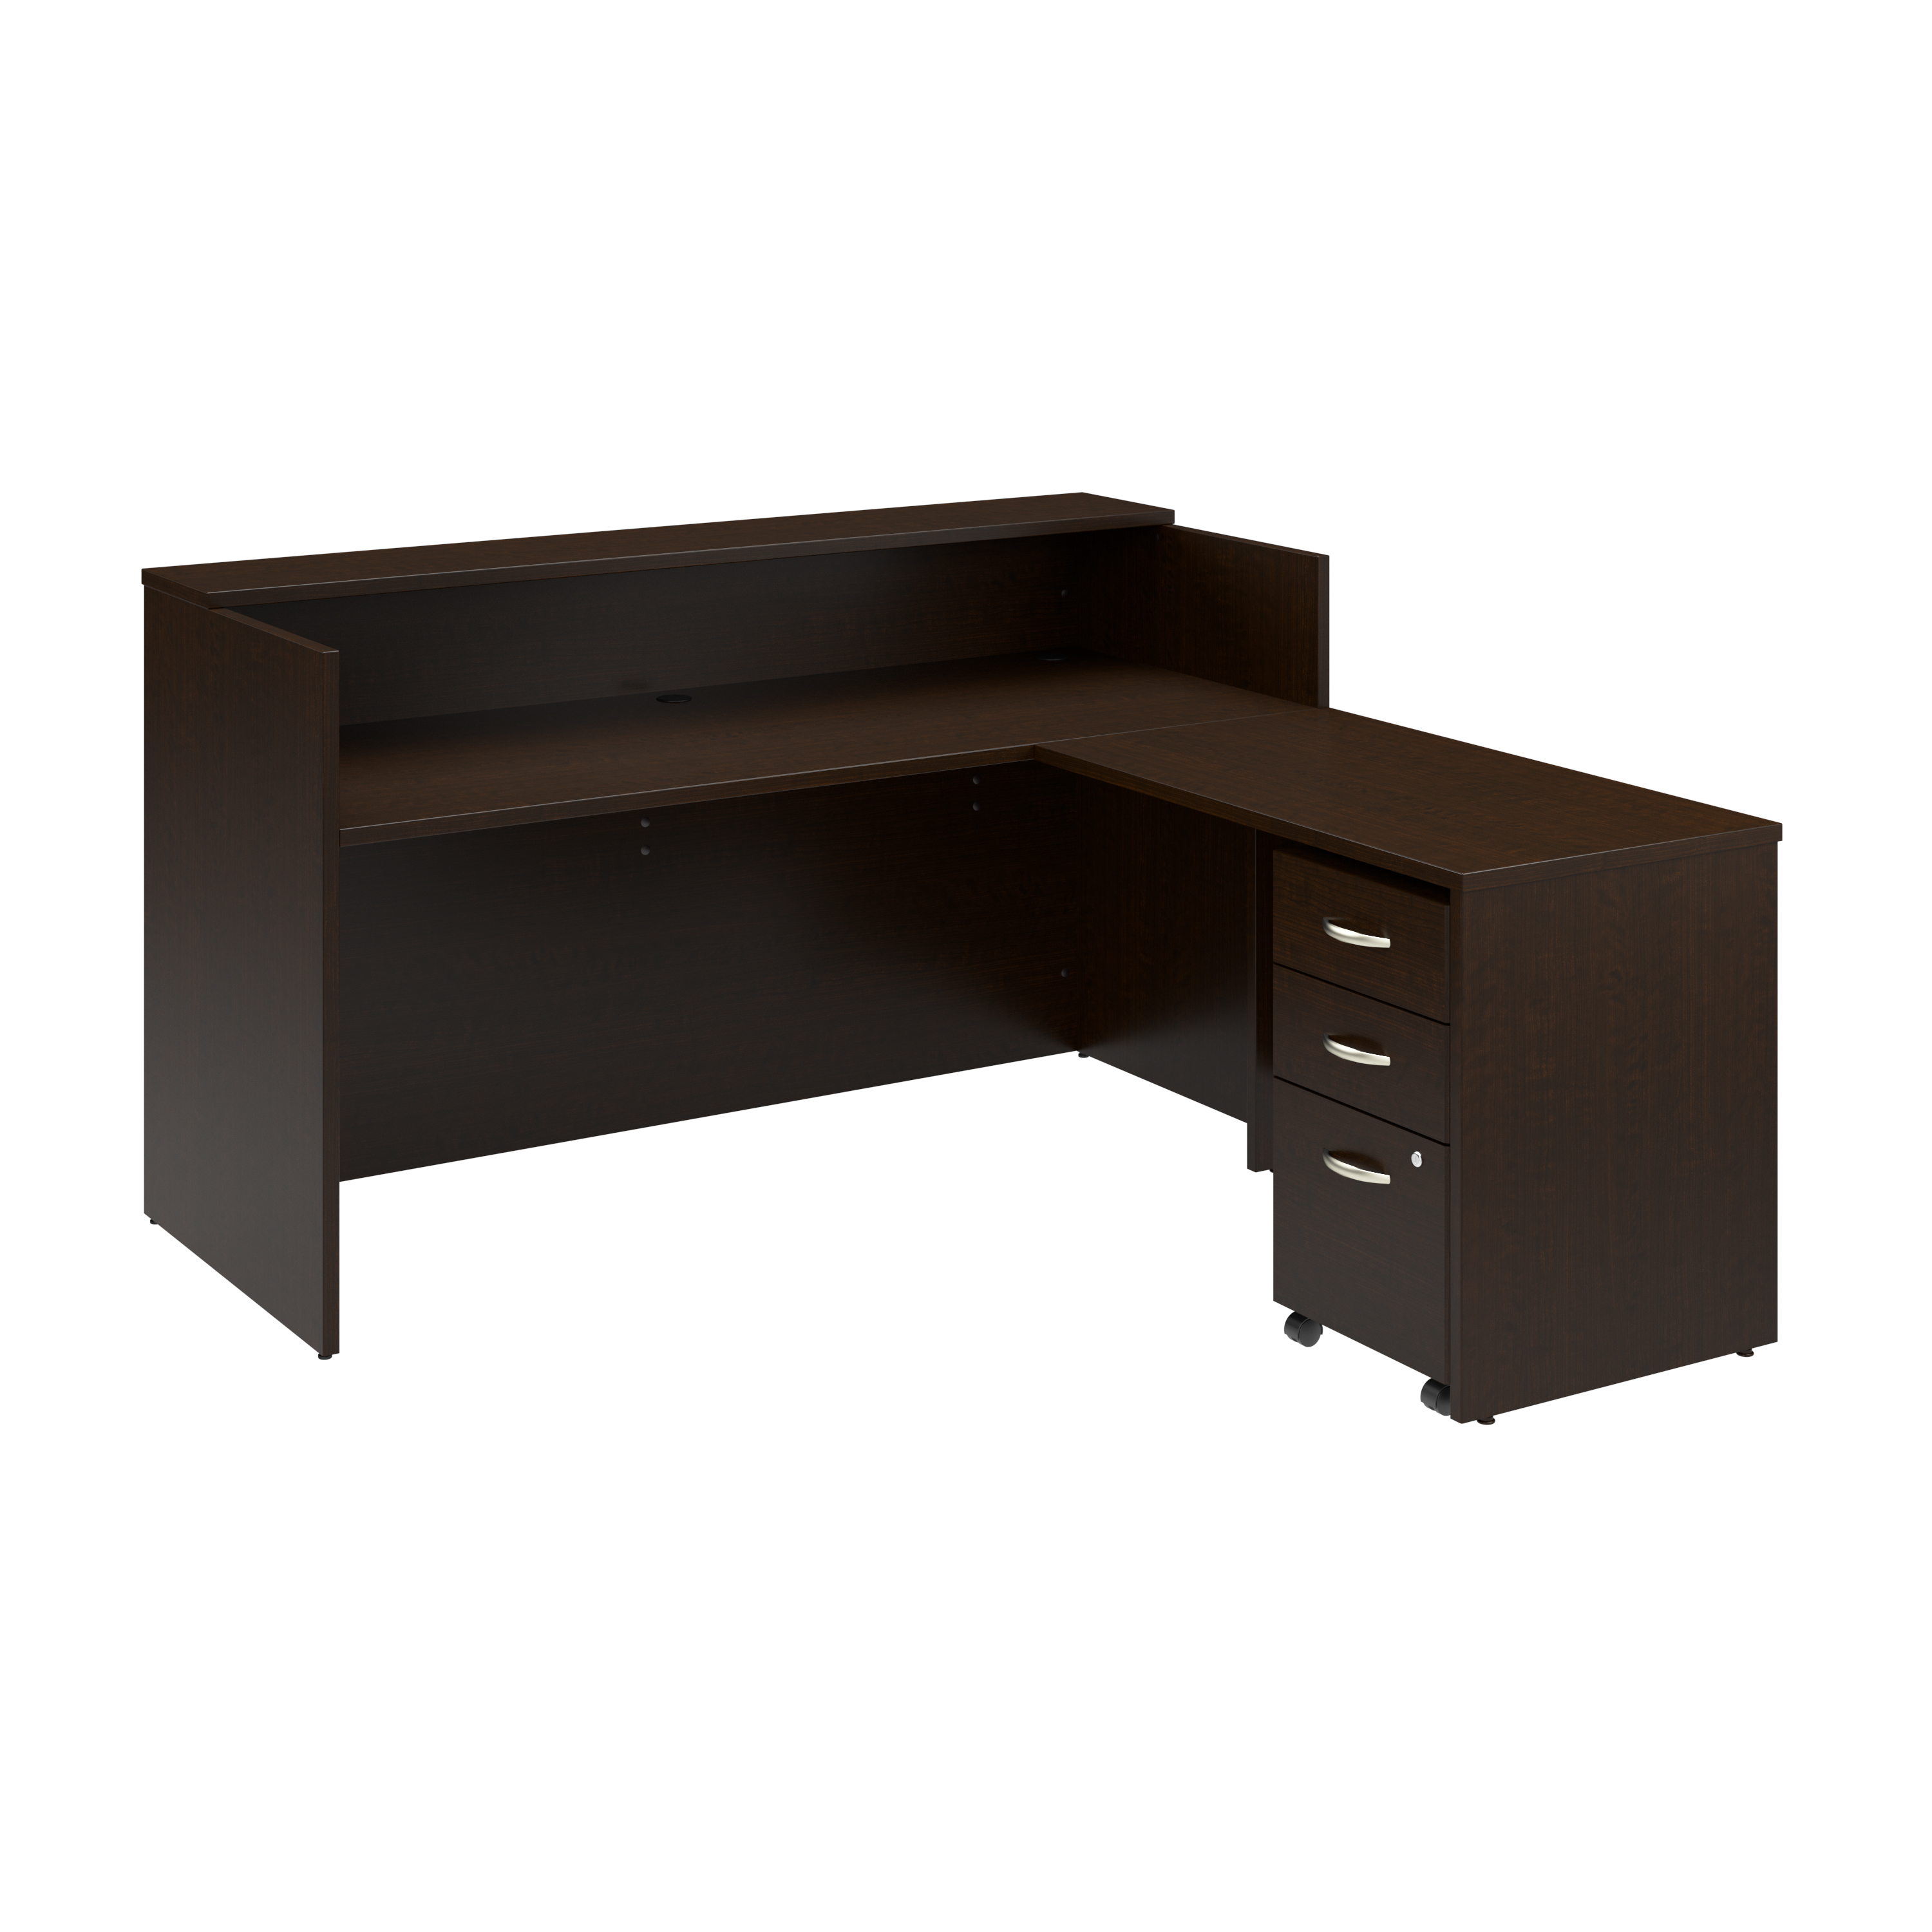 Shop Bush Business Furniture Arrive 72W x 72D L Shaped Reception Desk with Shelf and Mobile File Cabinet 02 ARV007MR #color_mocha cherry